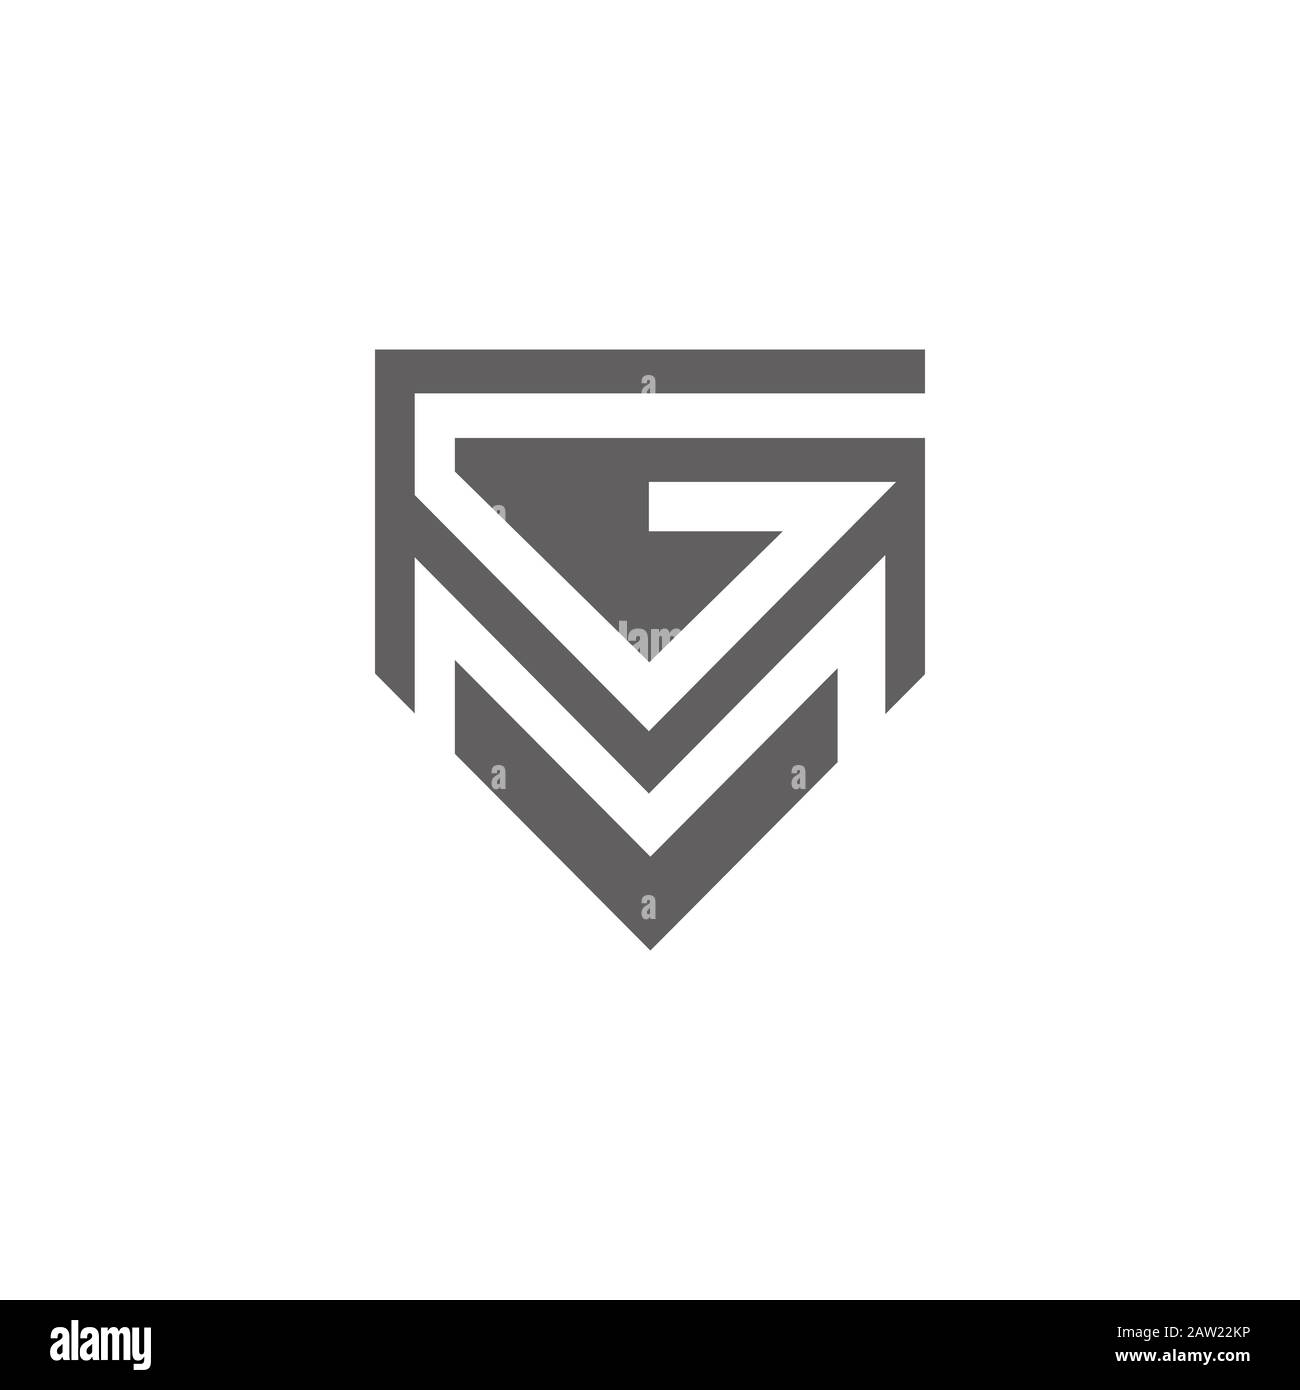 Initial letter gm or mg logo vector templates Stock Vector by ©mrshamsjaman  341437094